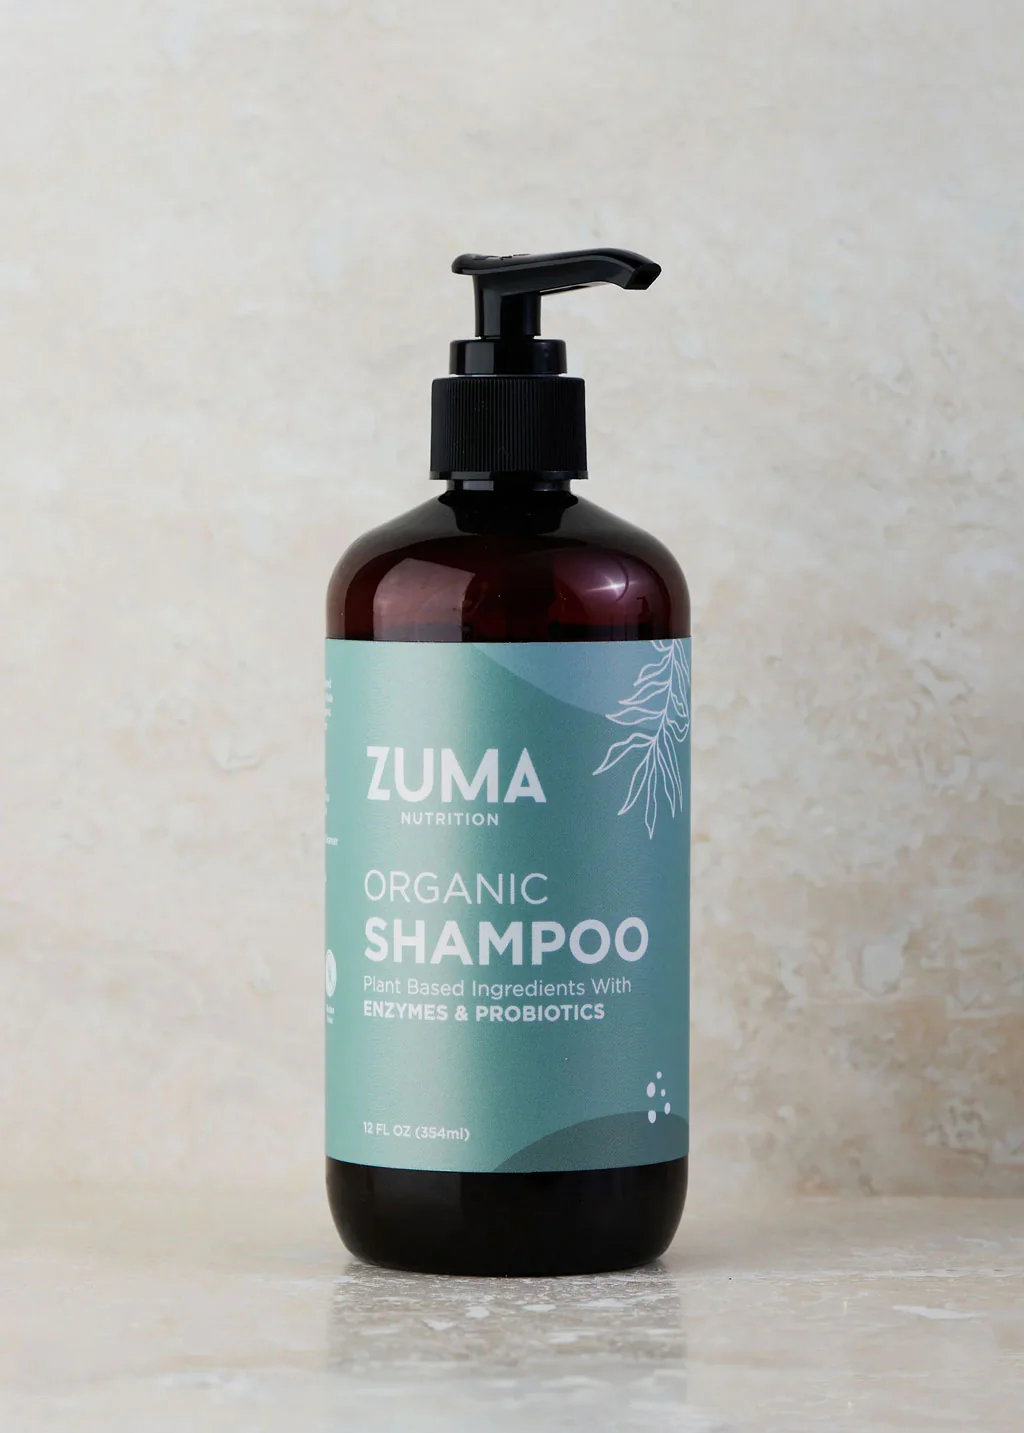 Zuma Nutrition Organic Shampoo review